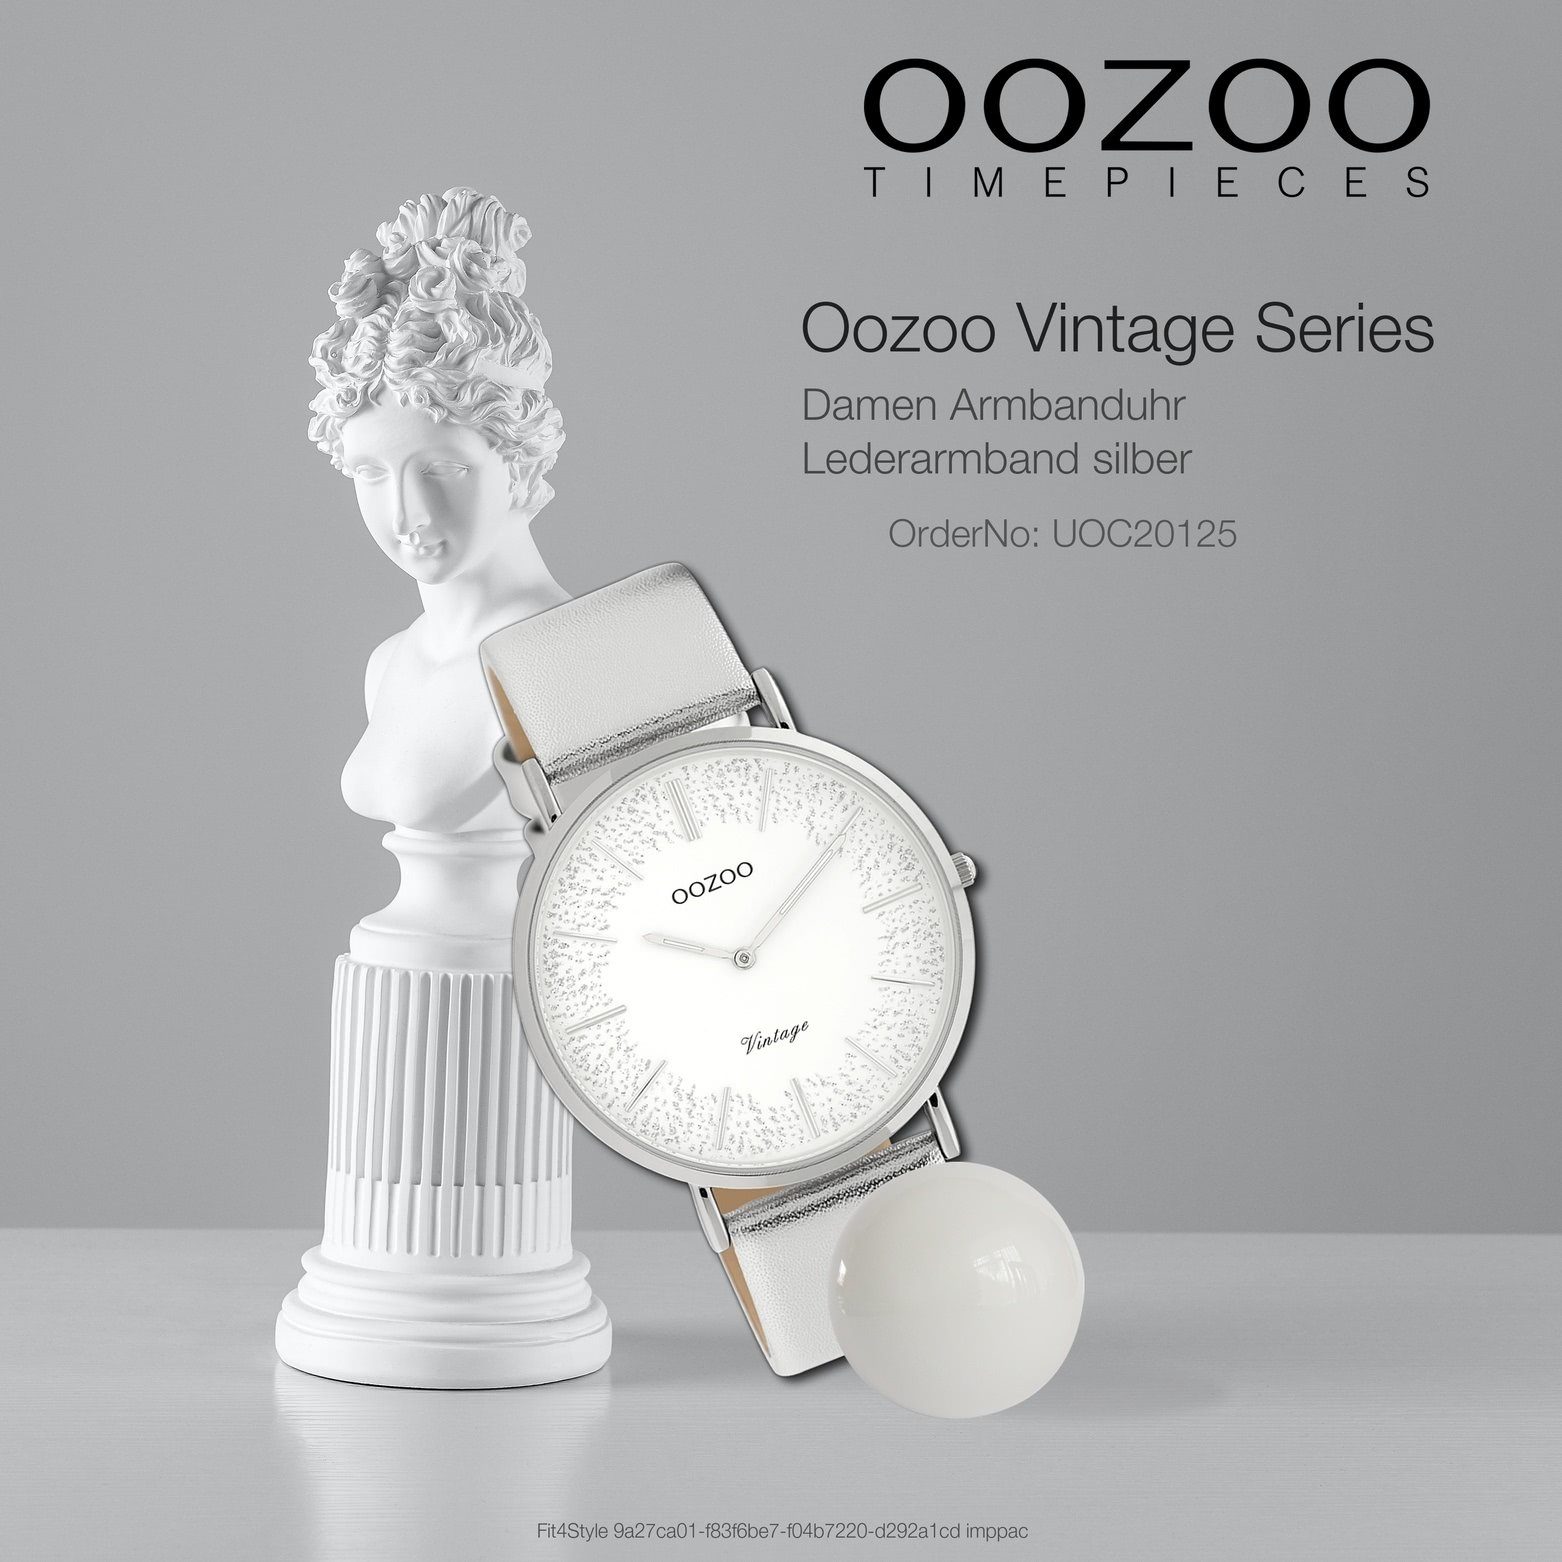 rund, Lederarmband, Quarzuhr Armbanduhr Damen silber Damenuhr OOZOO Oozoo Elegant-Style (ca. Analog, groß 40mm)